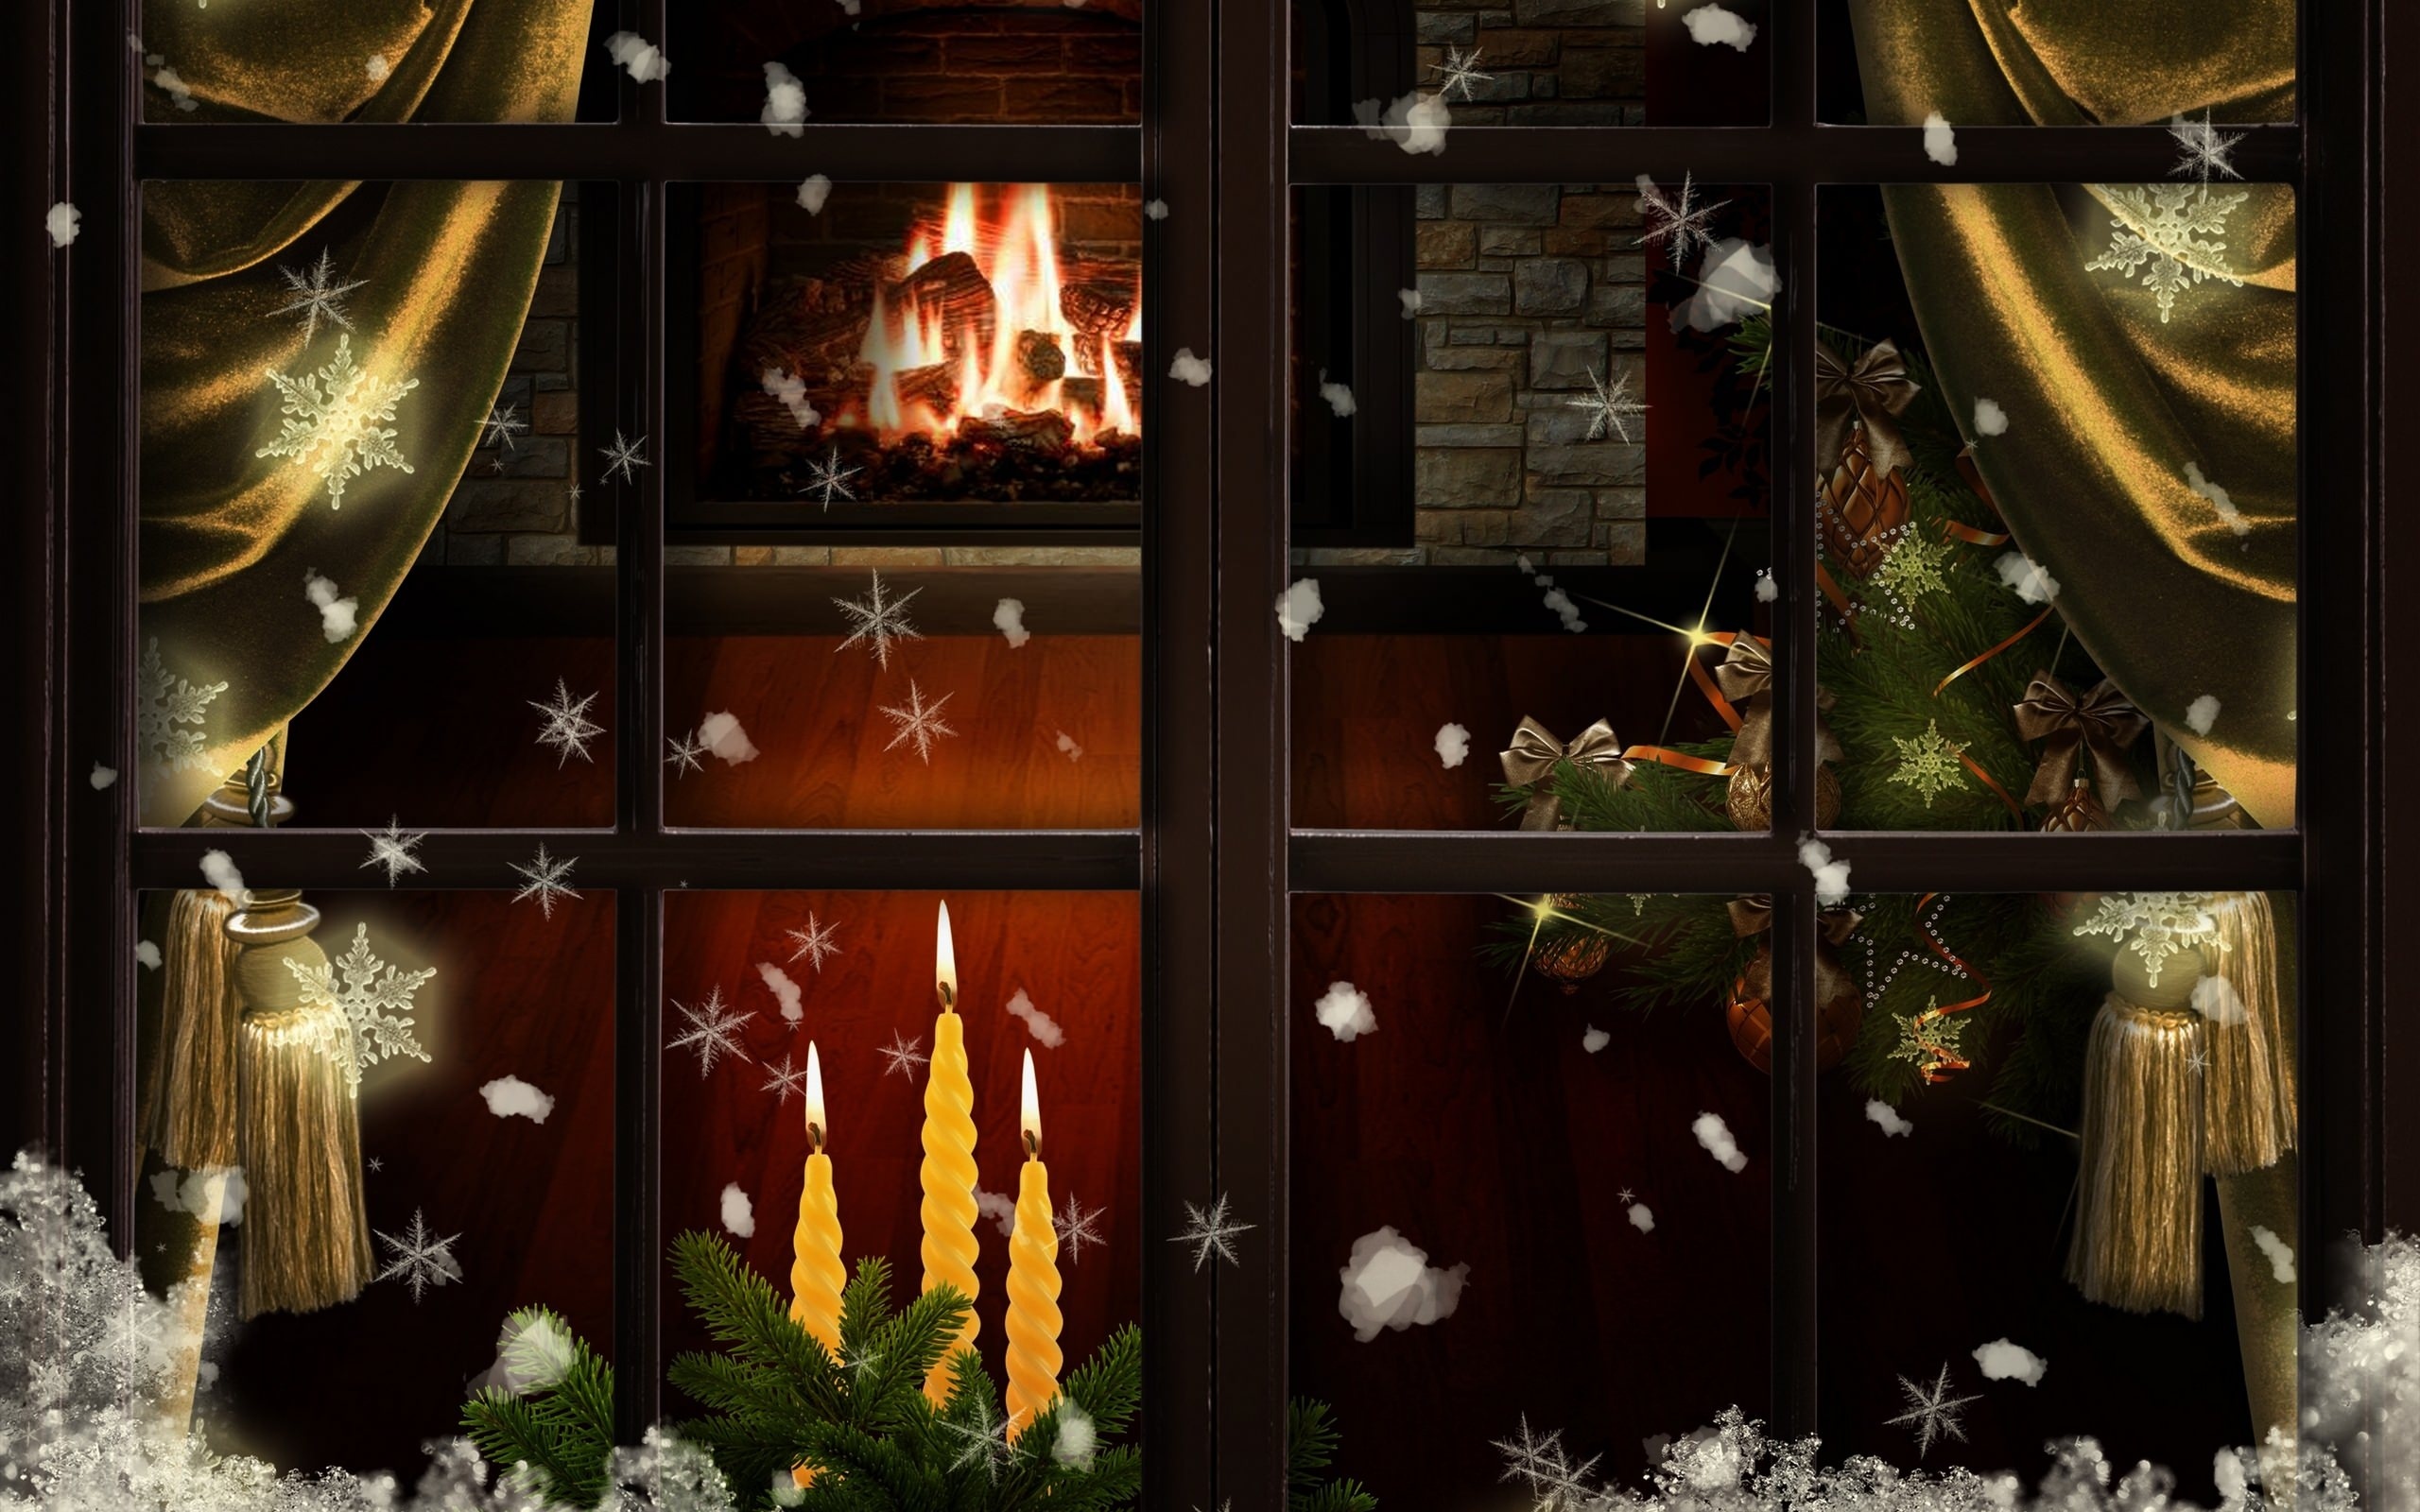 100 Free Christmas Fireplace  Fireplace Images  Pixabay